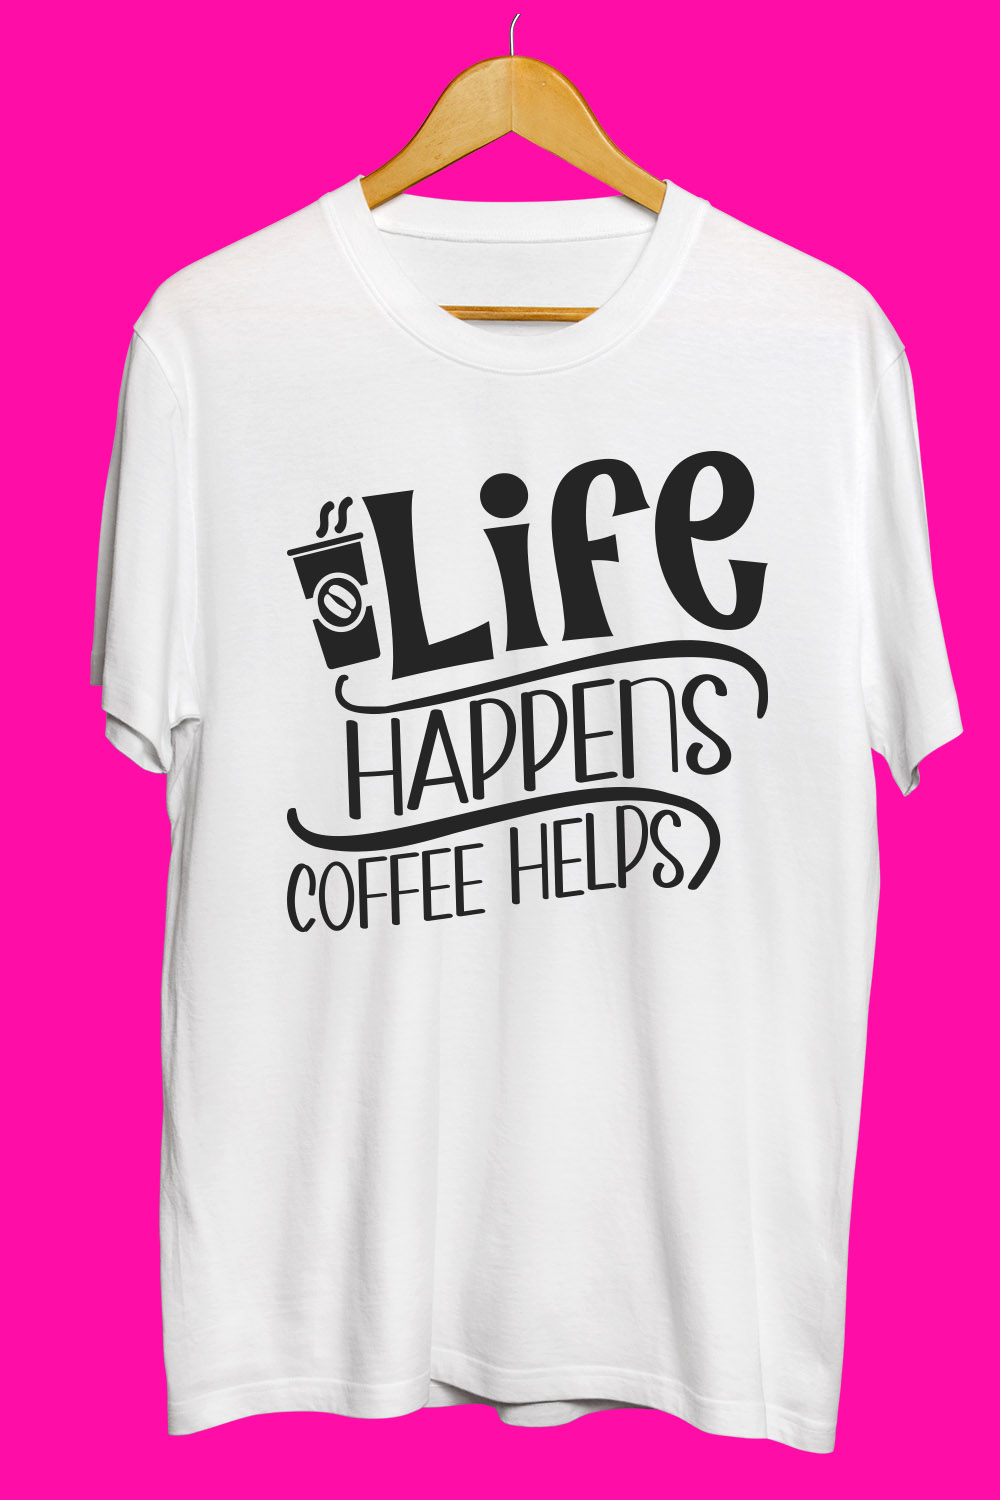 Coffee SVG T Shirt Designs Bundle pinterest preview image.